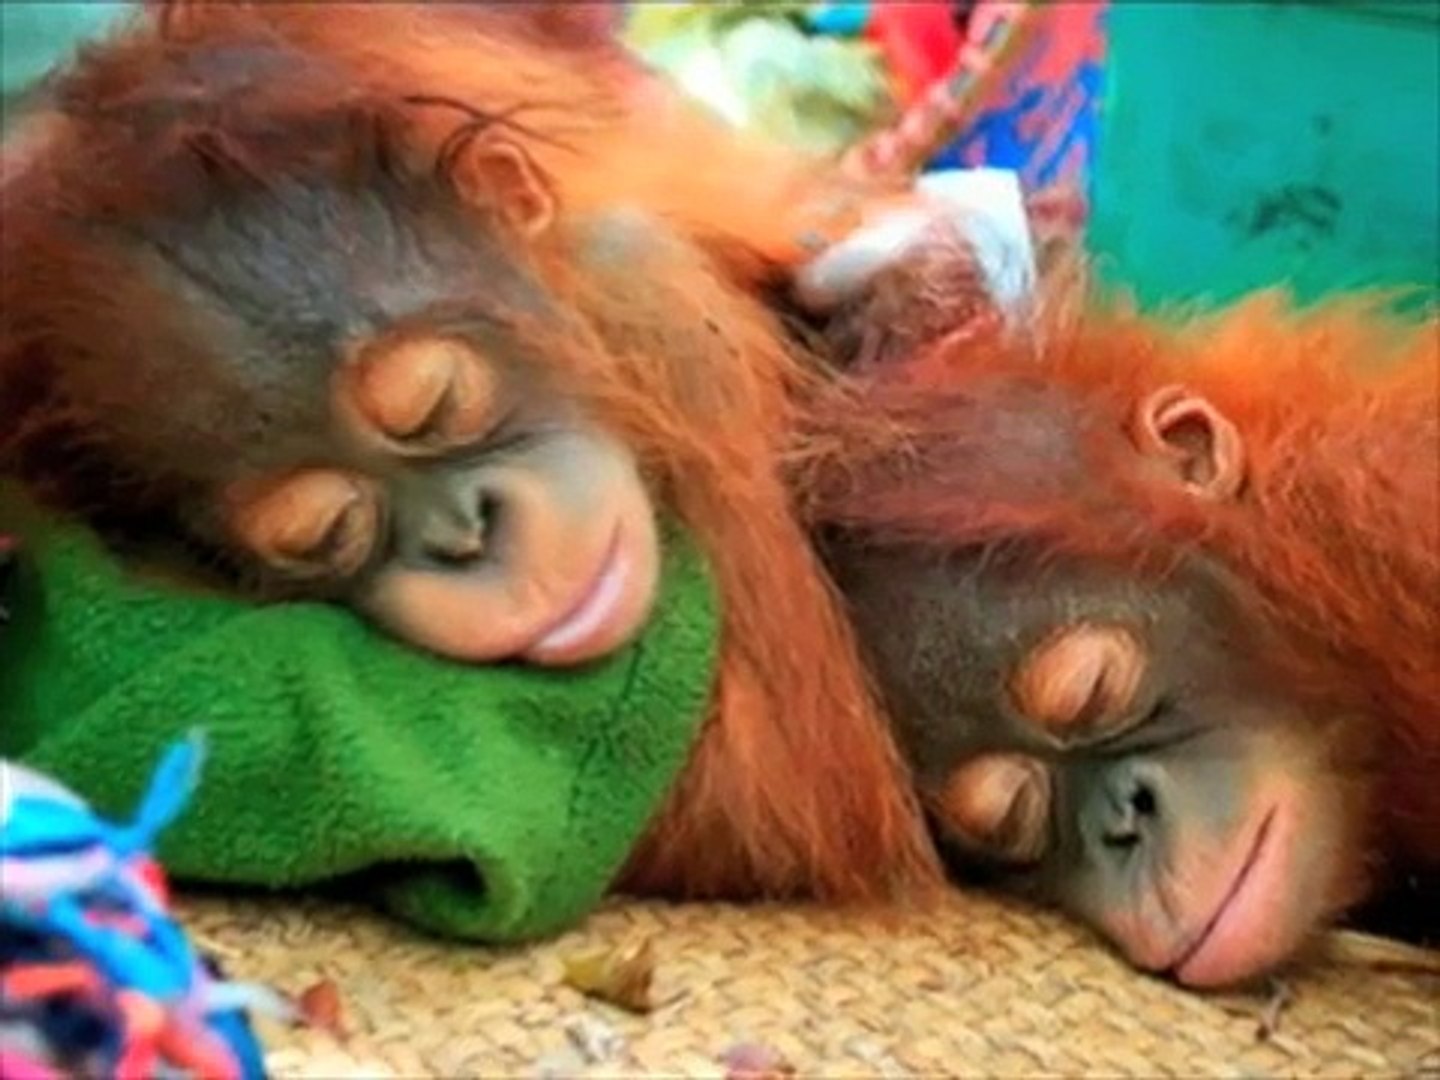 Orangutans need your help today